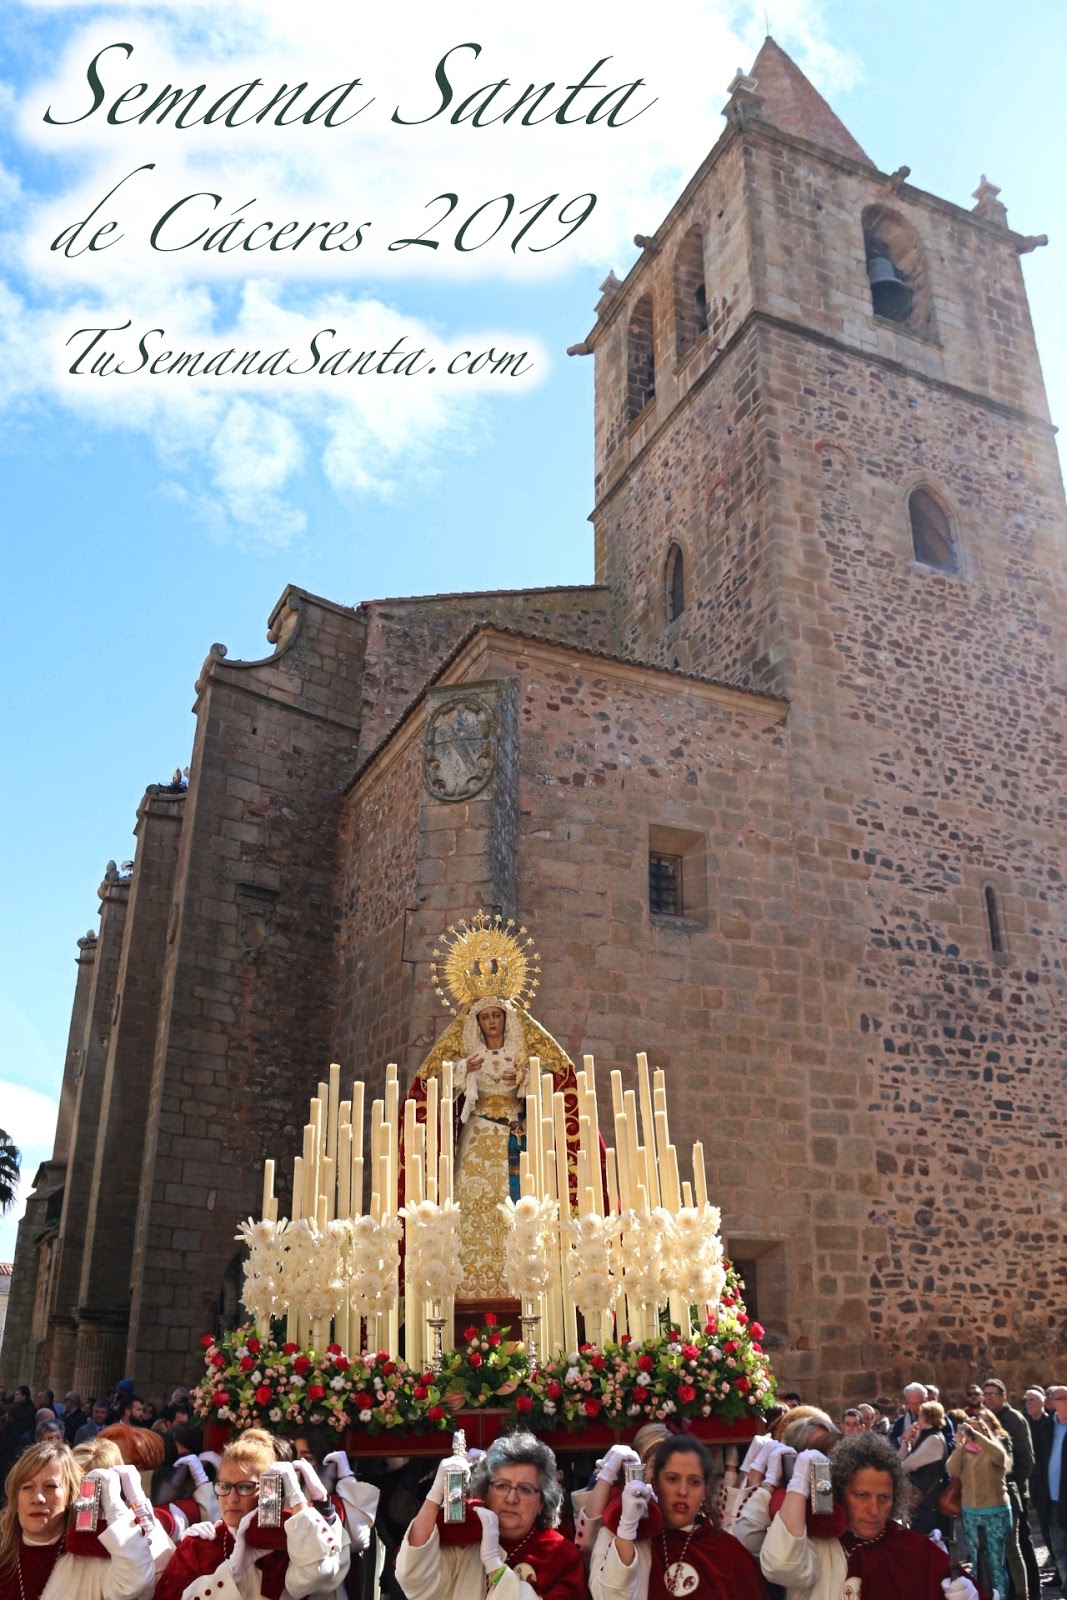 Semana Santa de Cáceres 2019 | TuSemanaSanta.com